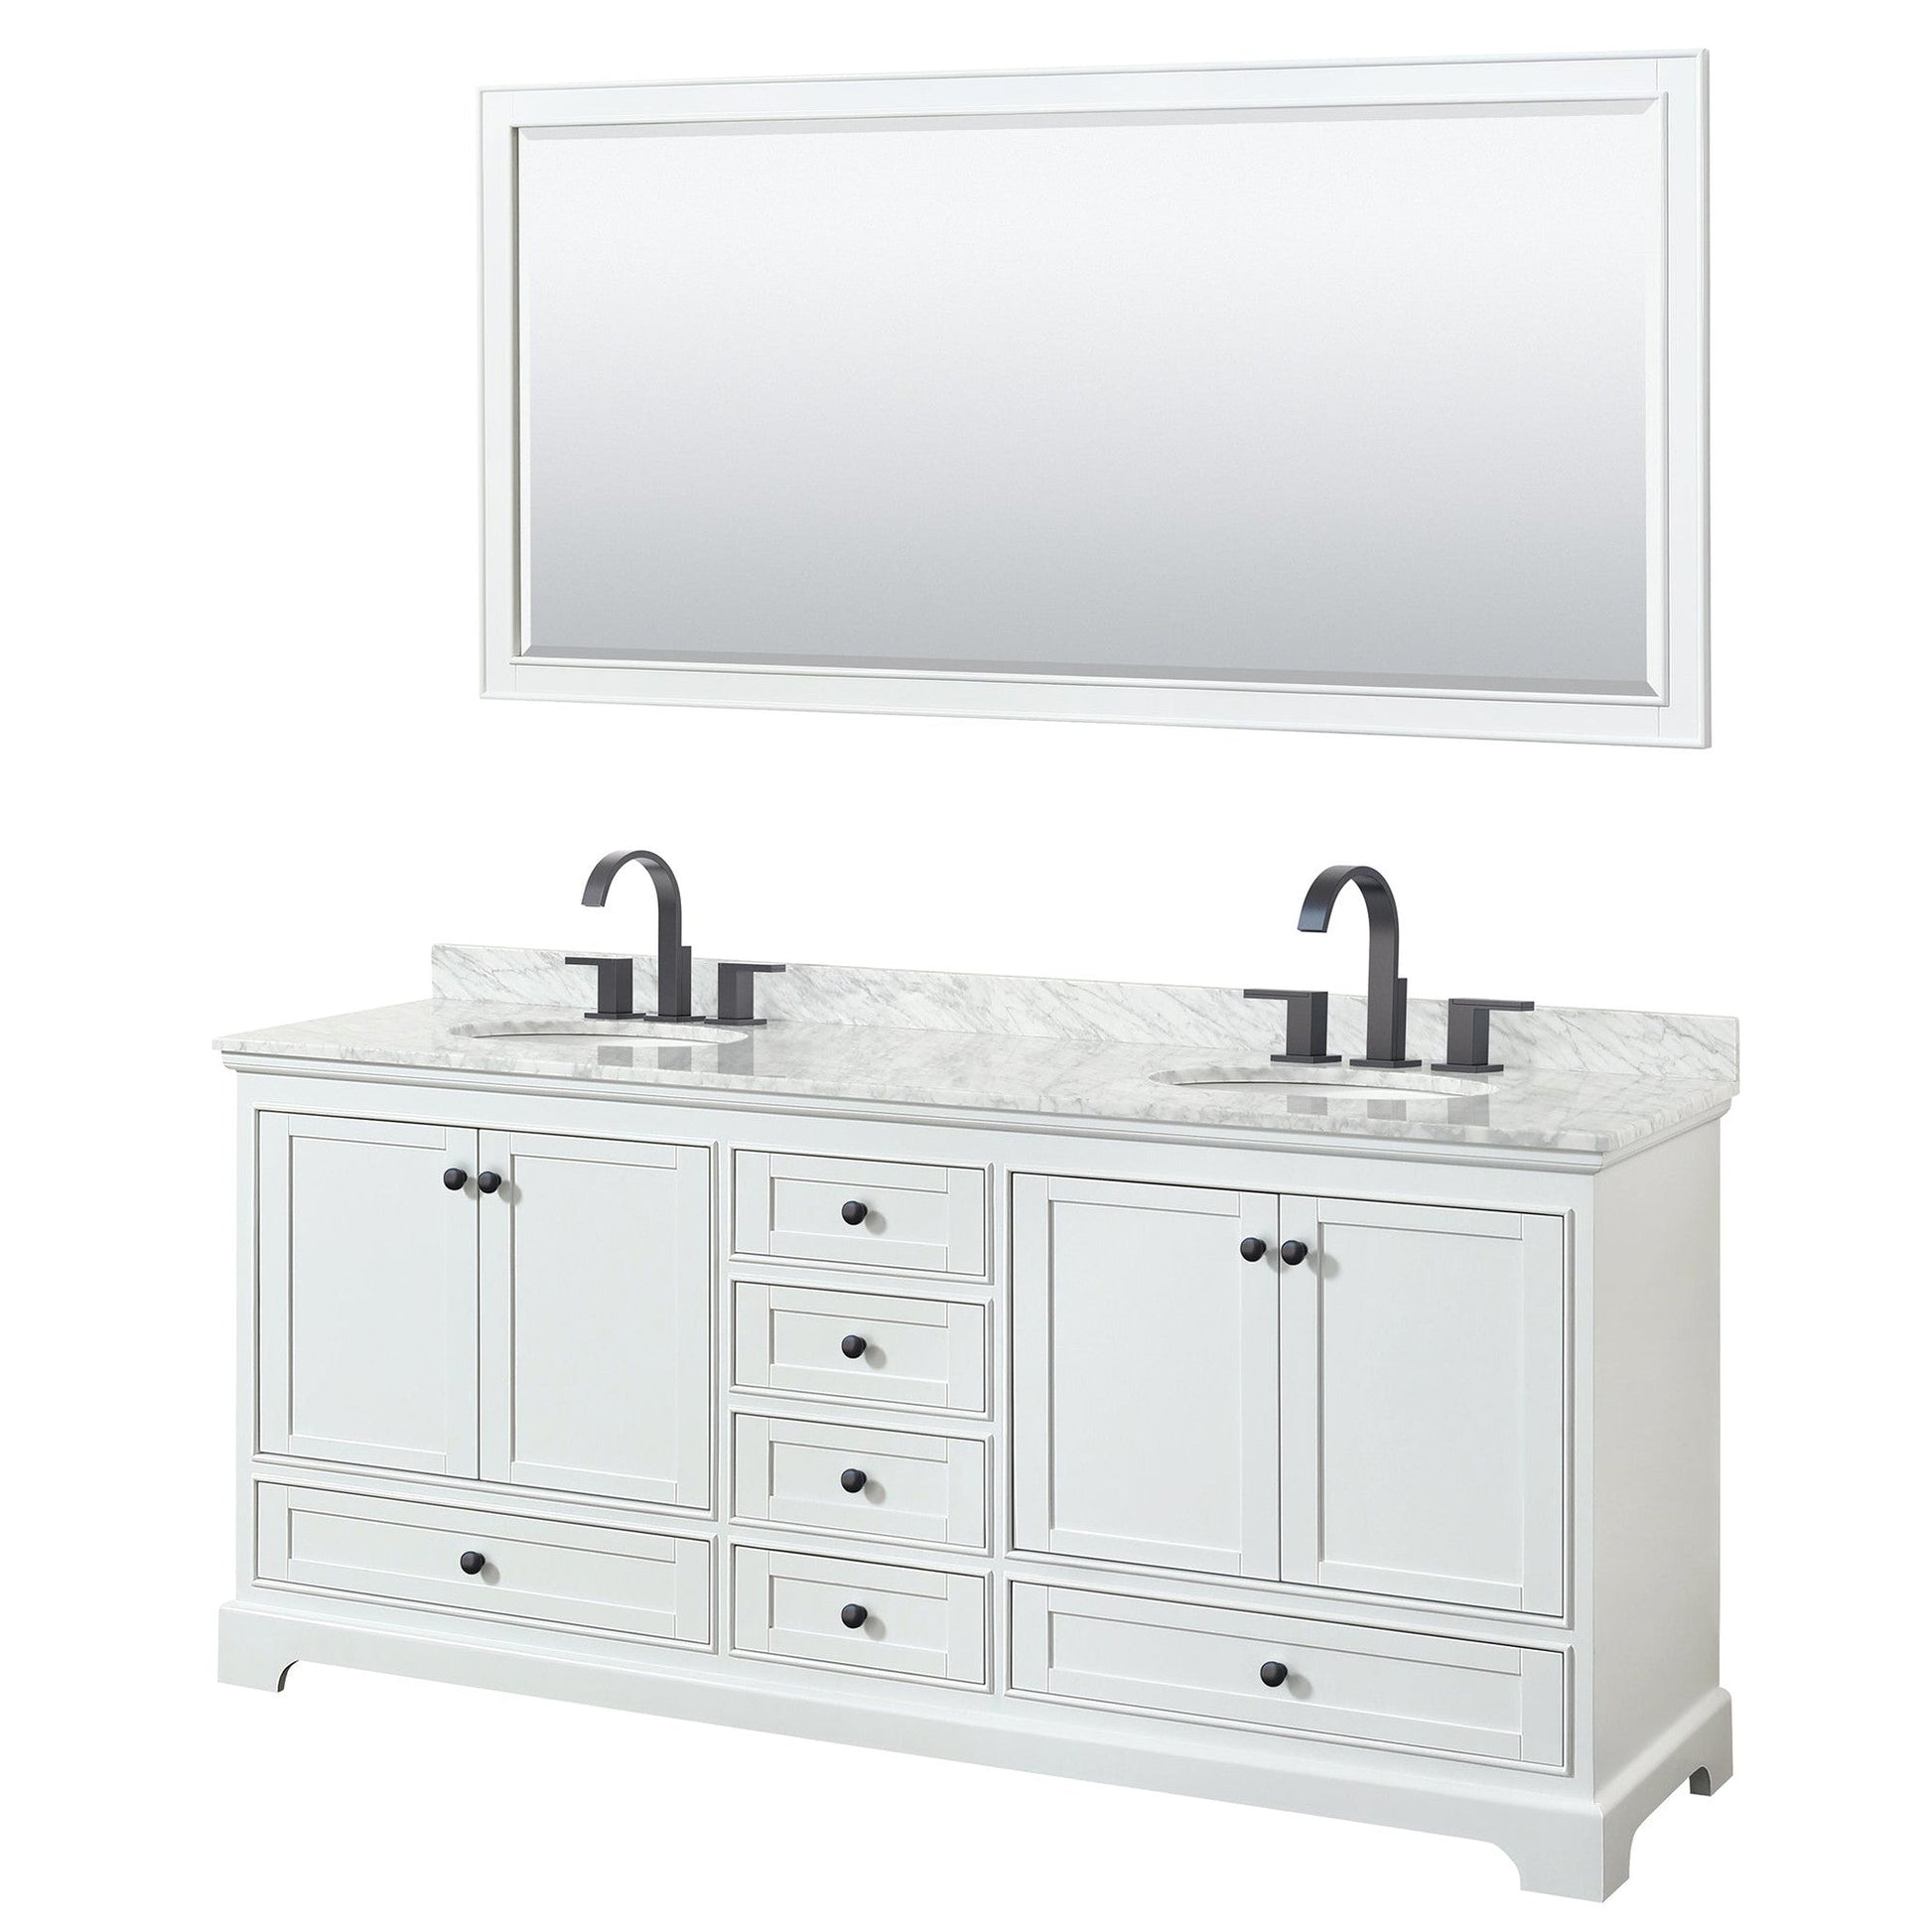 Deborah 80" Double Bathroom Vanity in White, White Carrara Marble Countertop, Undermount Oval Sinks, Matte Black Trim, 70" Mirror